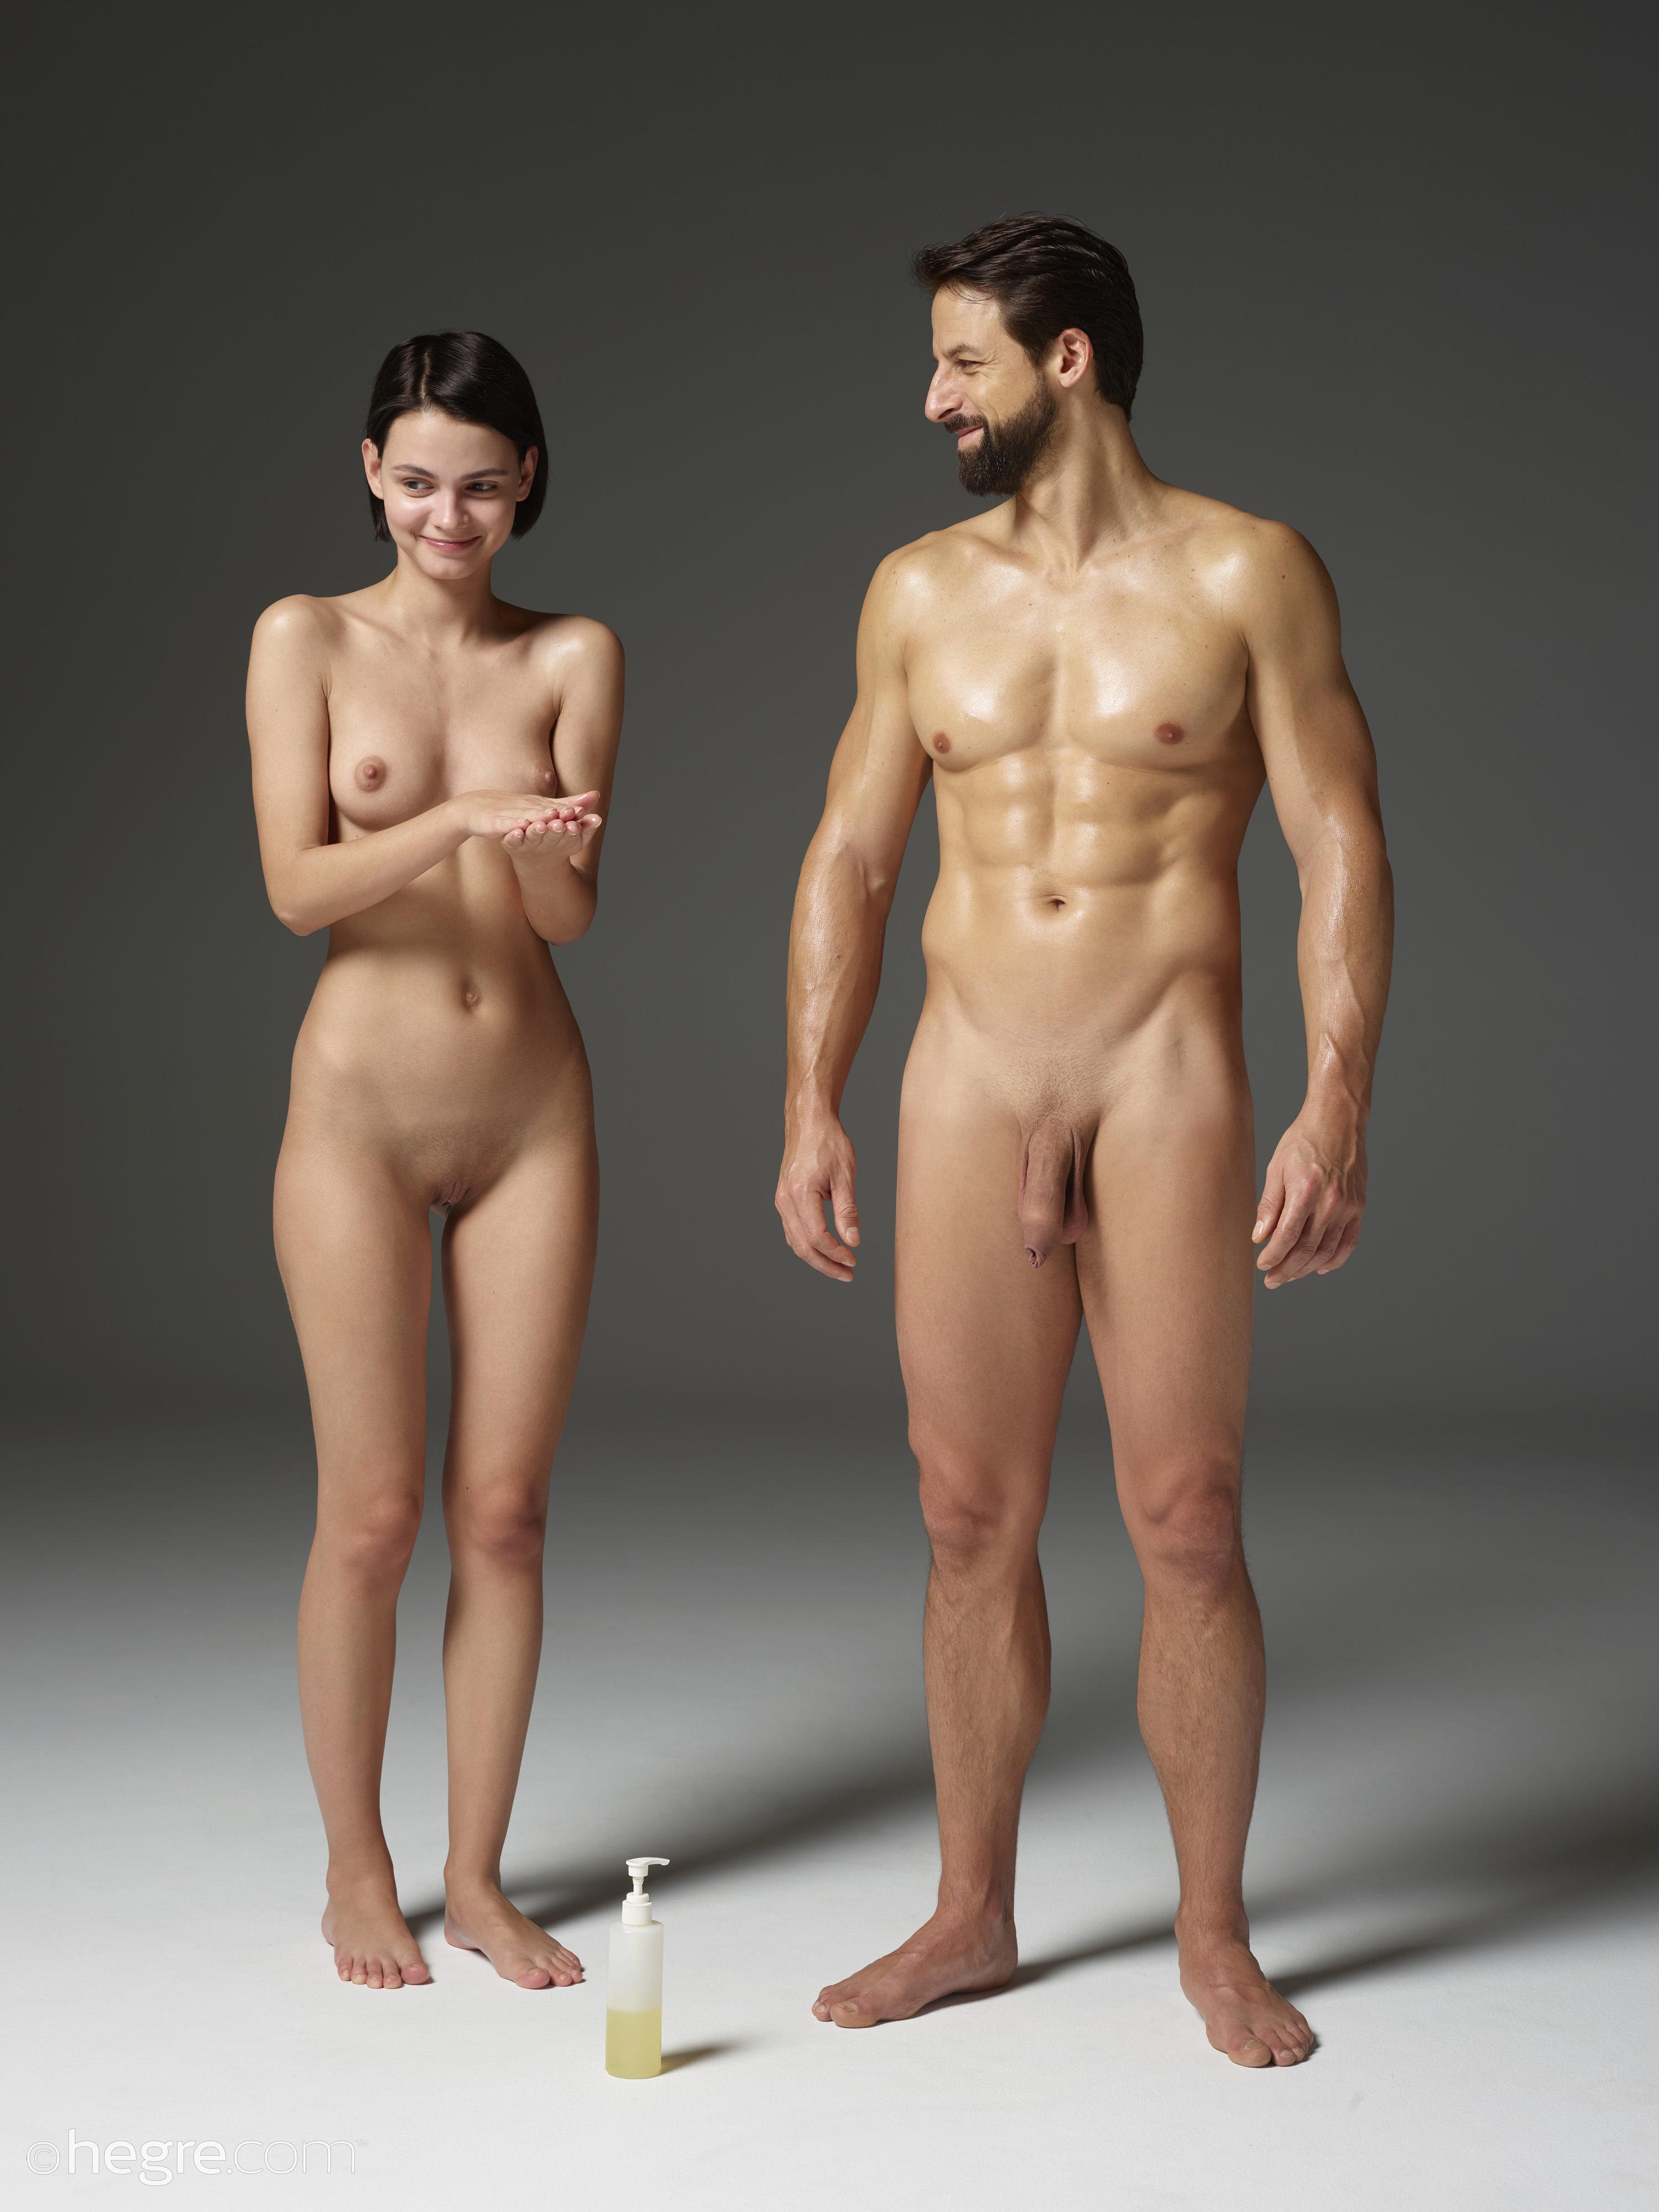 abhishek rajoria add photos of naked people photo